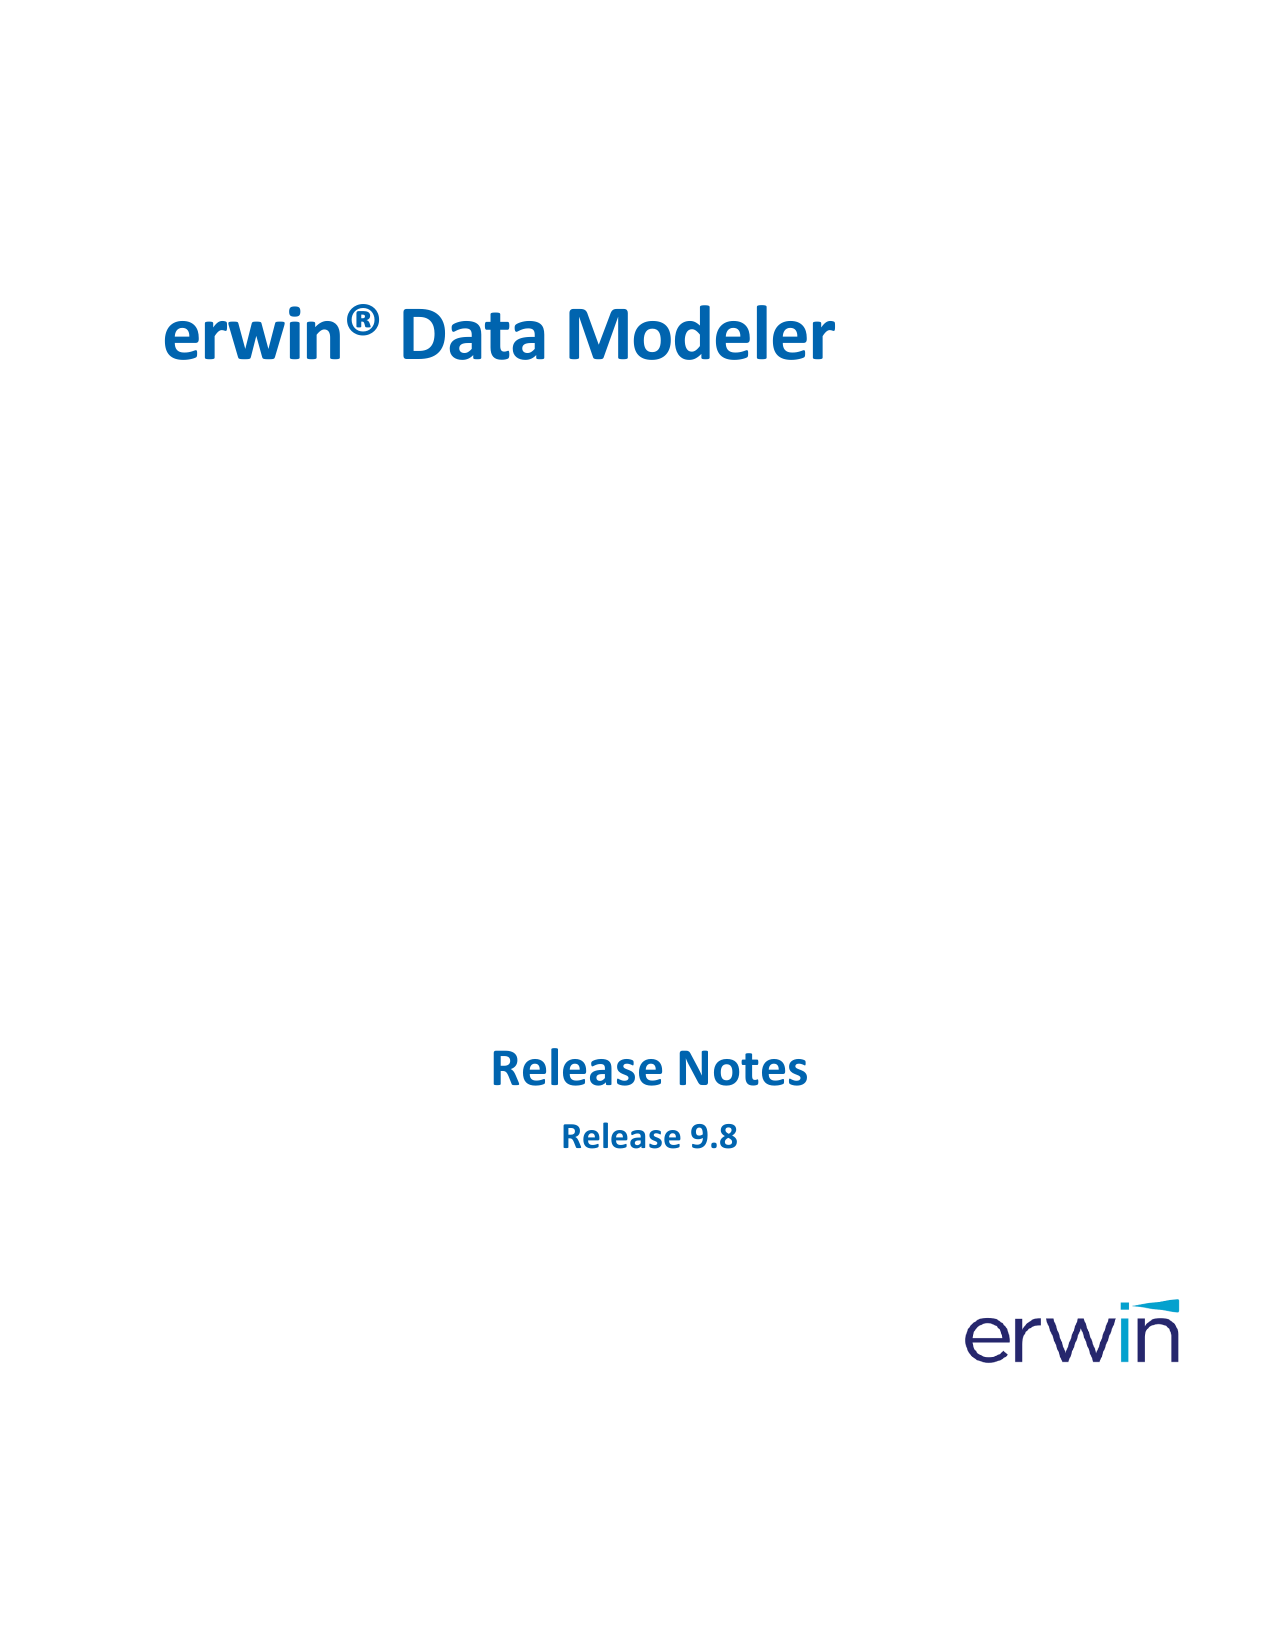 ca erwin data modeler license file download